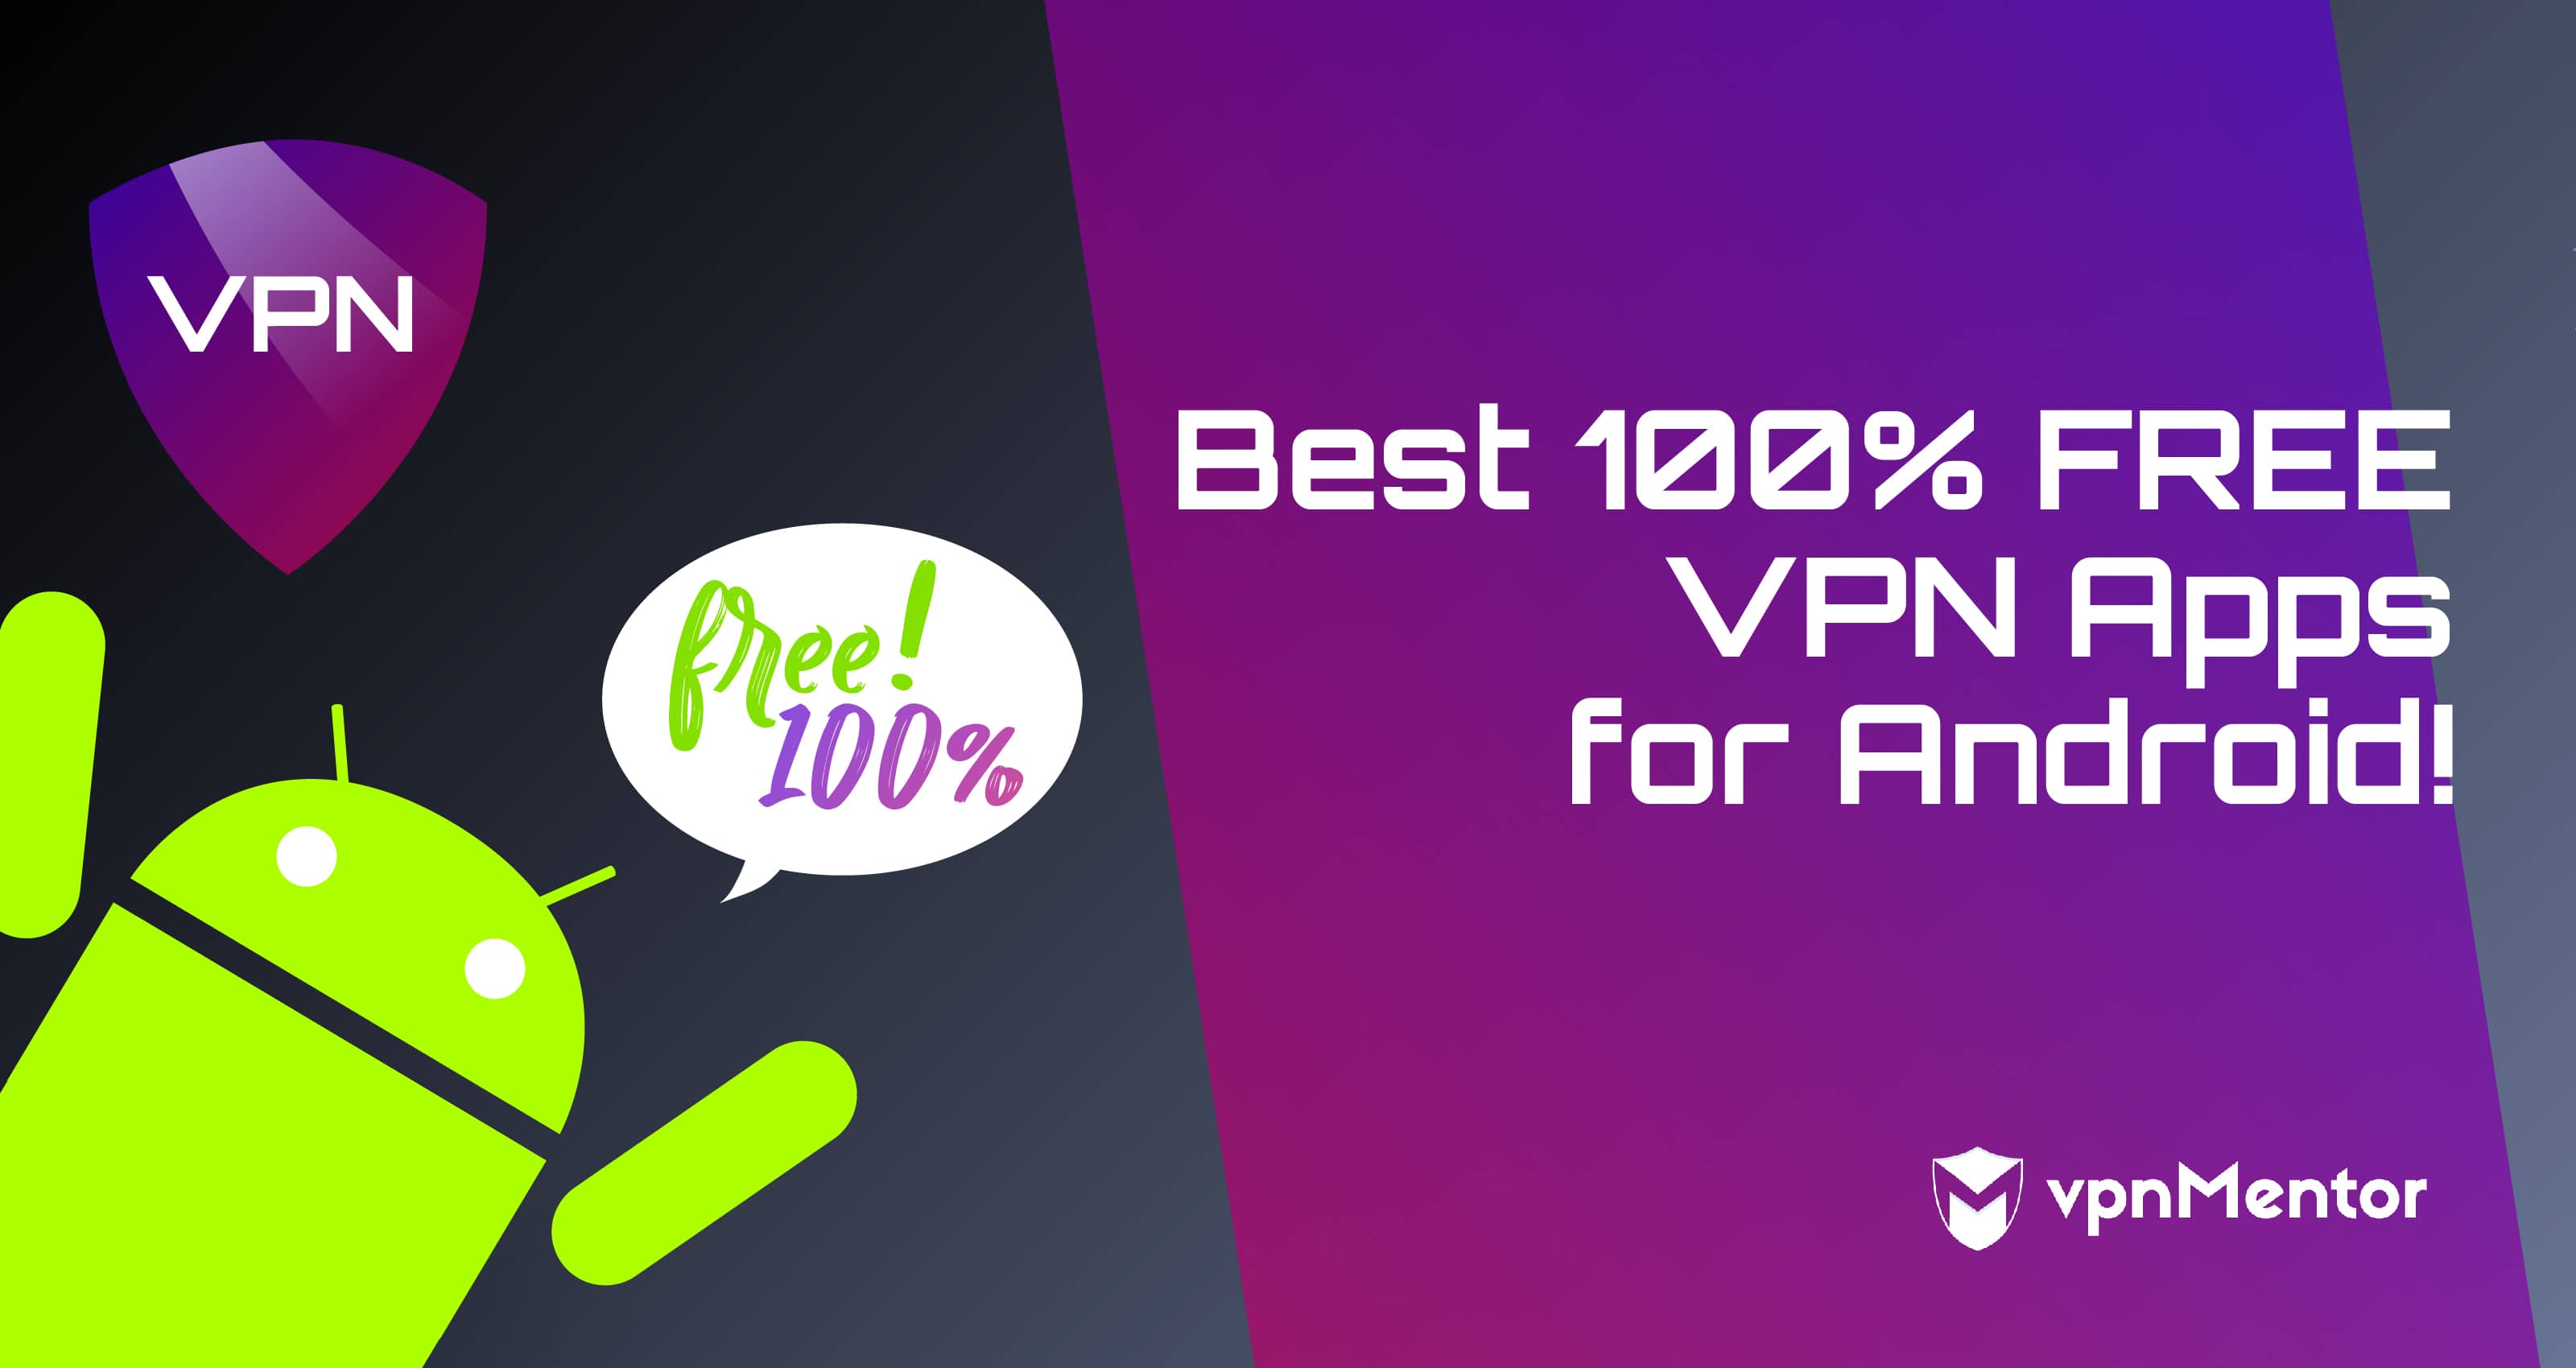 The best VPN service 2021 TechRadar